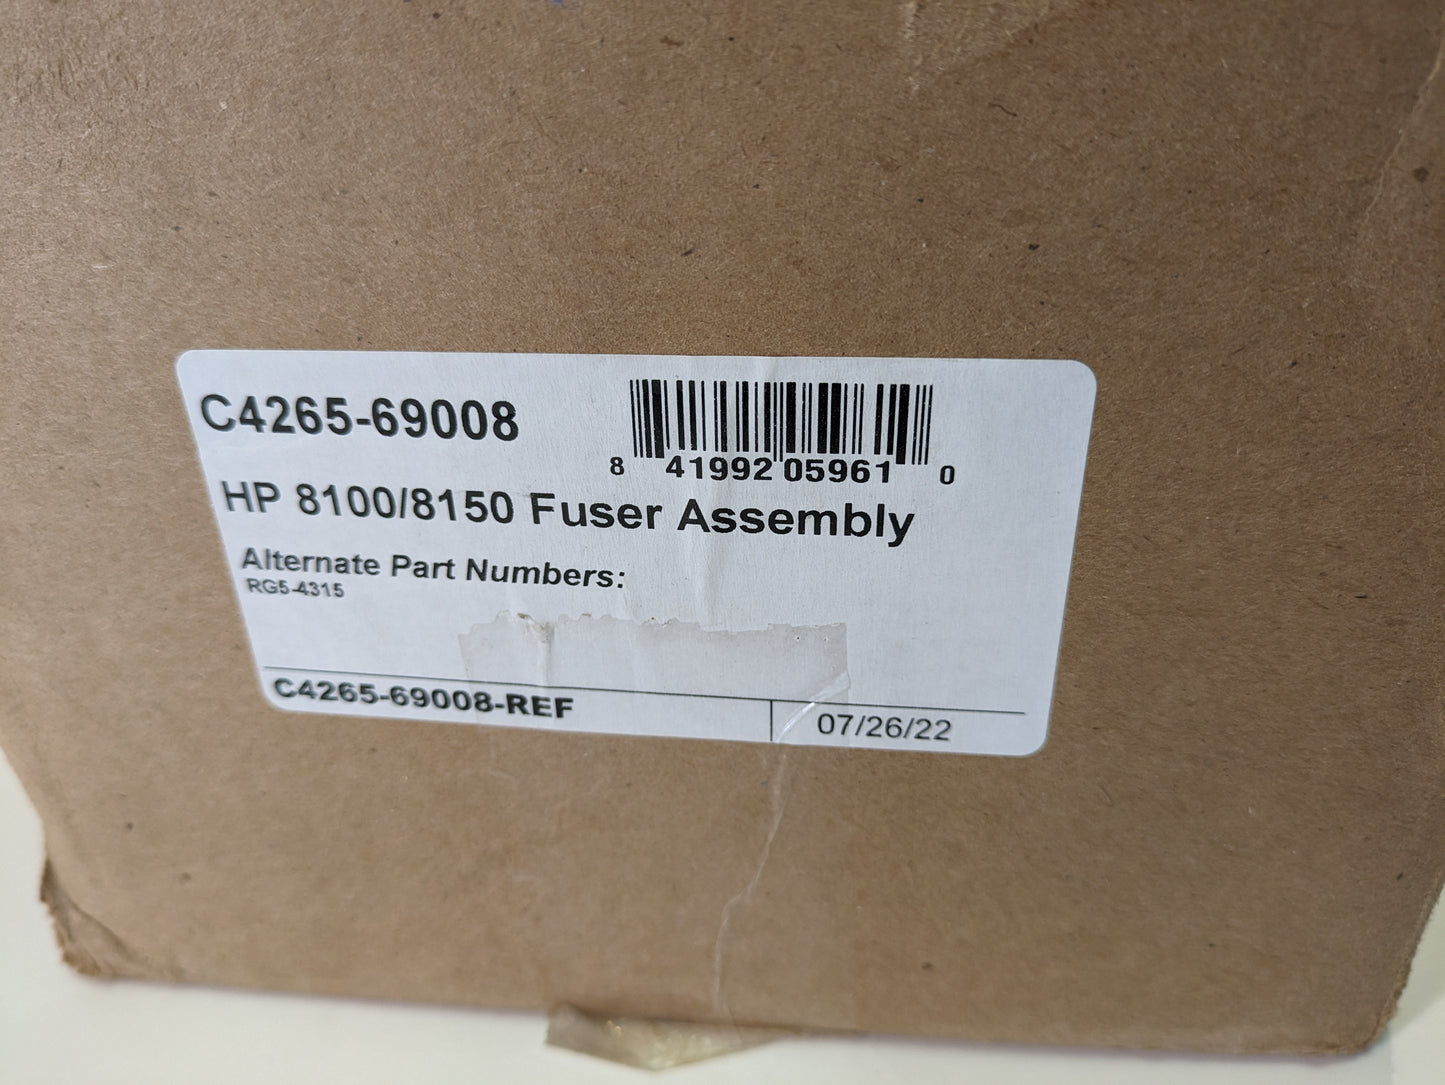 Depot International HP 8100/8150 Fuser Assembly - C4265-69008-REF Used